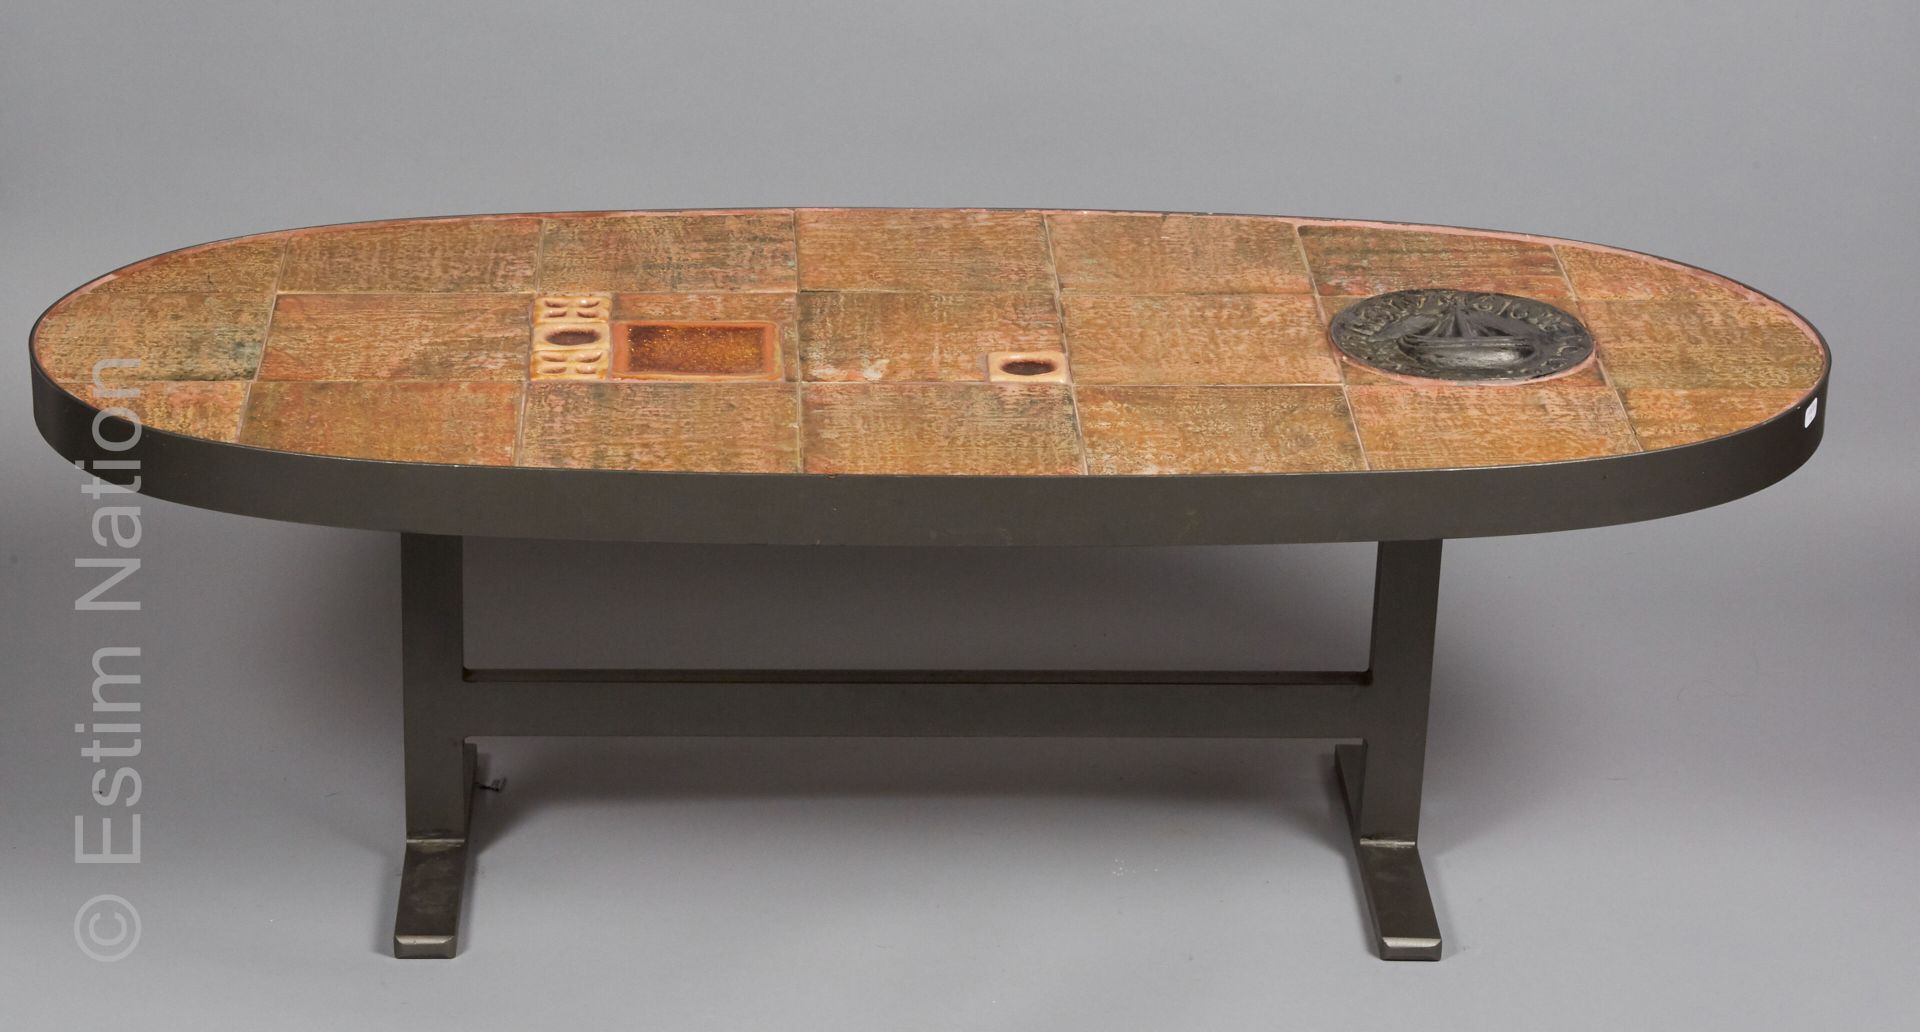 VERS 1970 - TABLE BASSE 咖啡桌，椭圆形的桌面由多色陶土砖制成，上面有熔岩上的珐琅彩，还有一个代表船的锡制护手，周围有拉丁文的铭文。197&hellip;